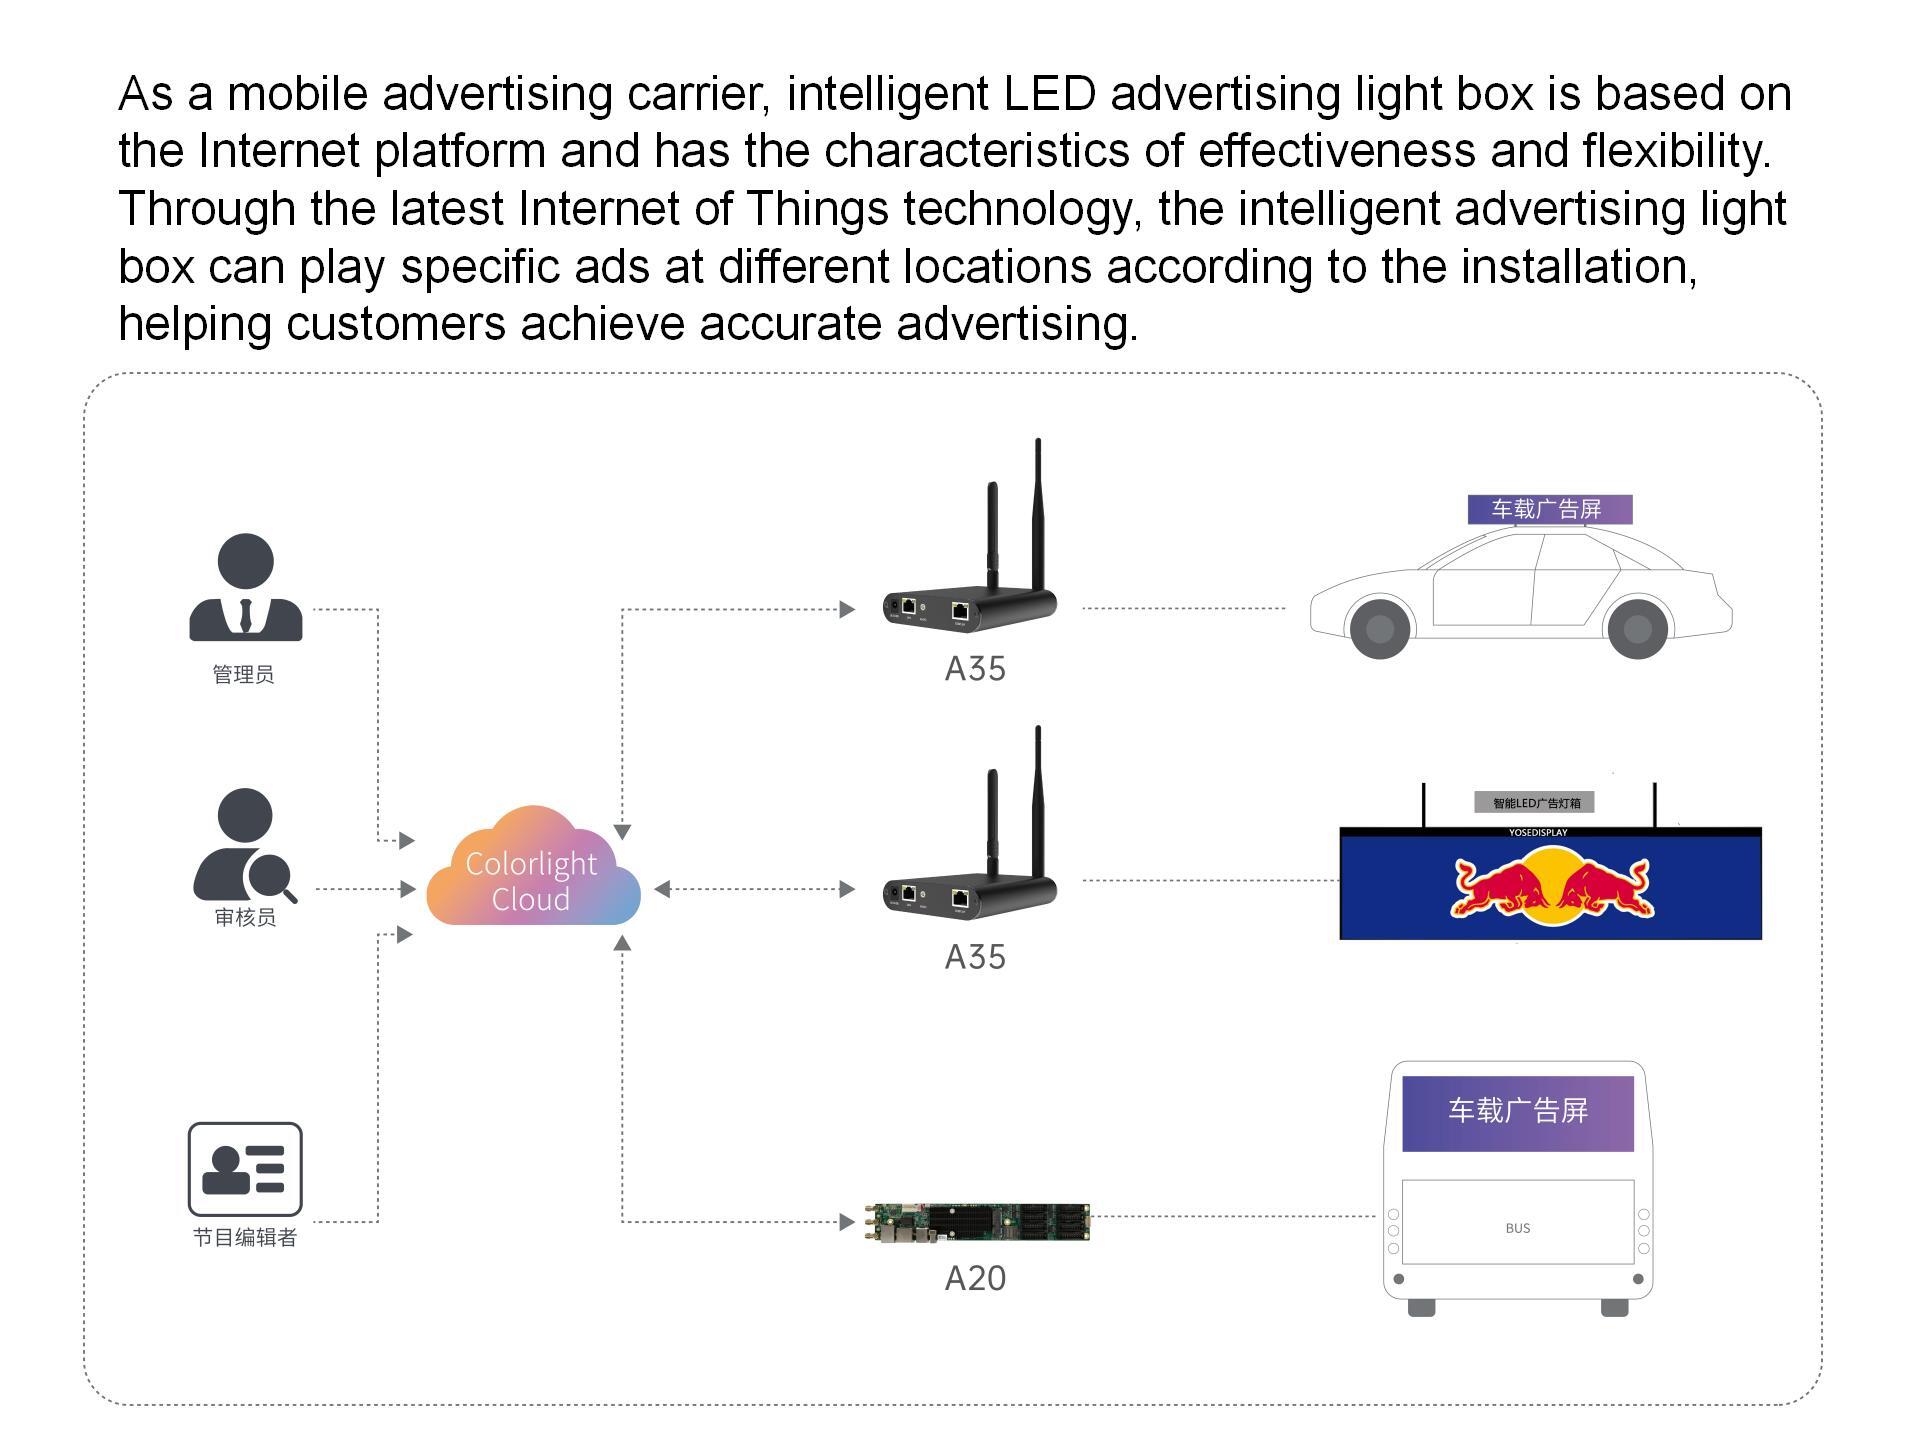 Intelligent LED advertising light box